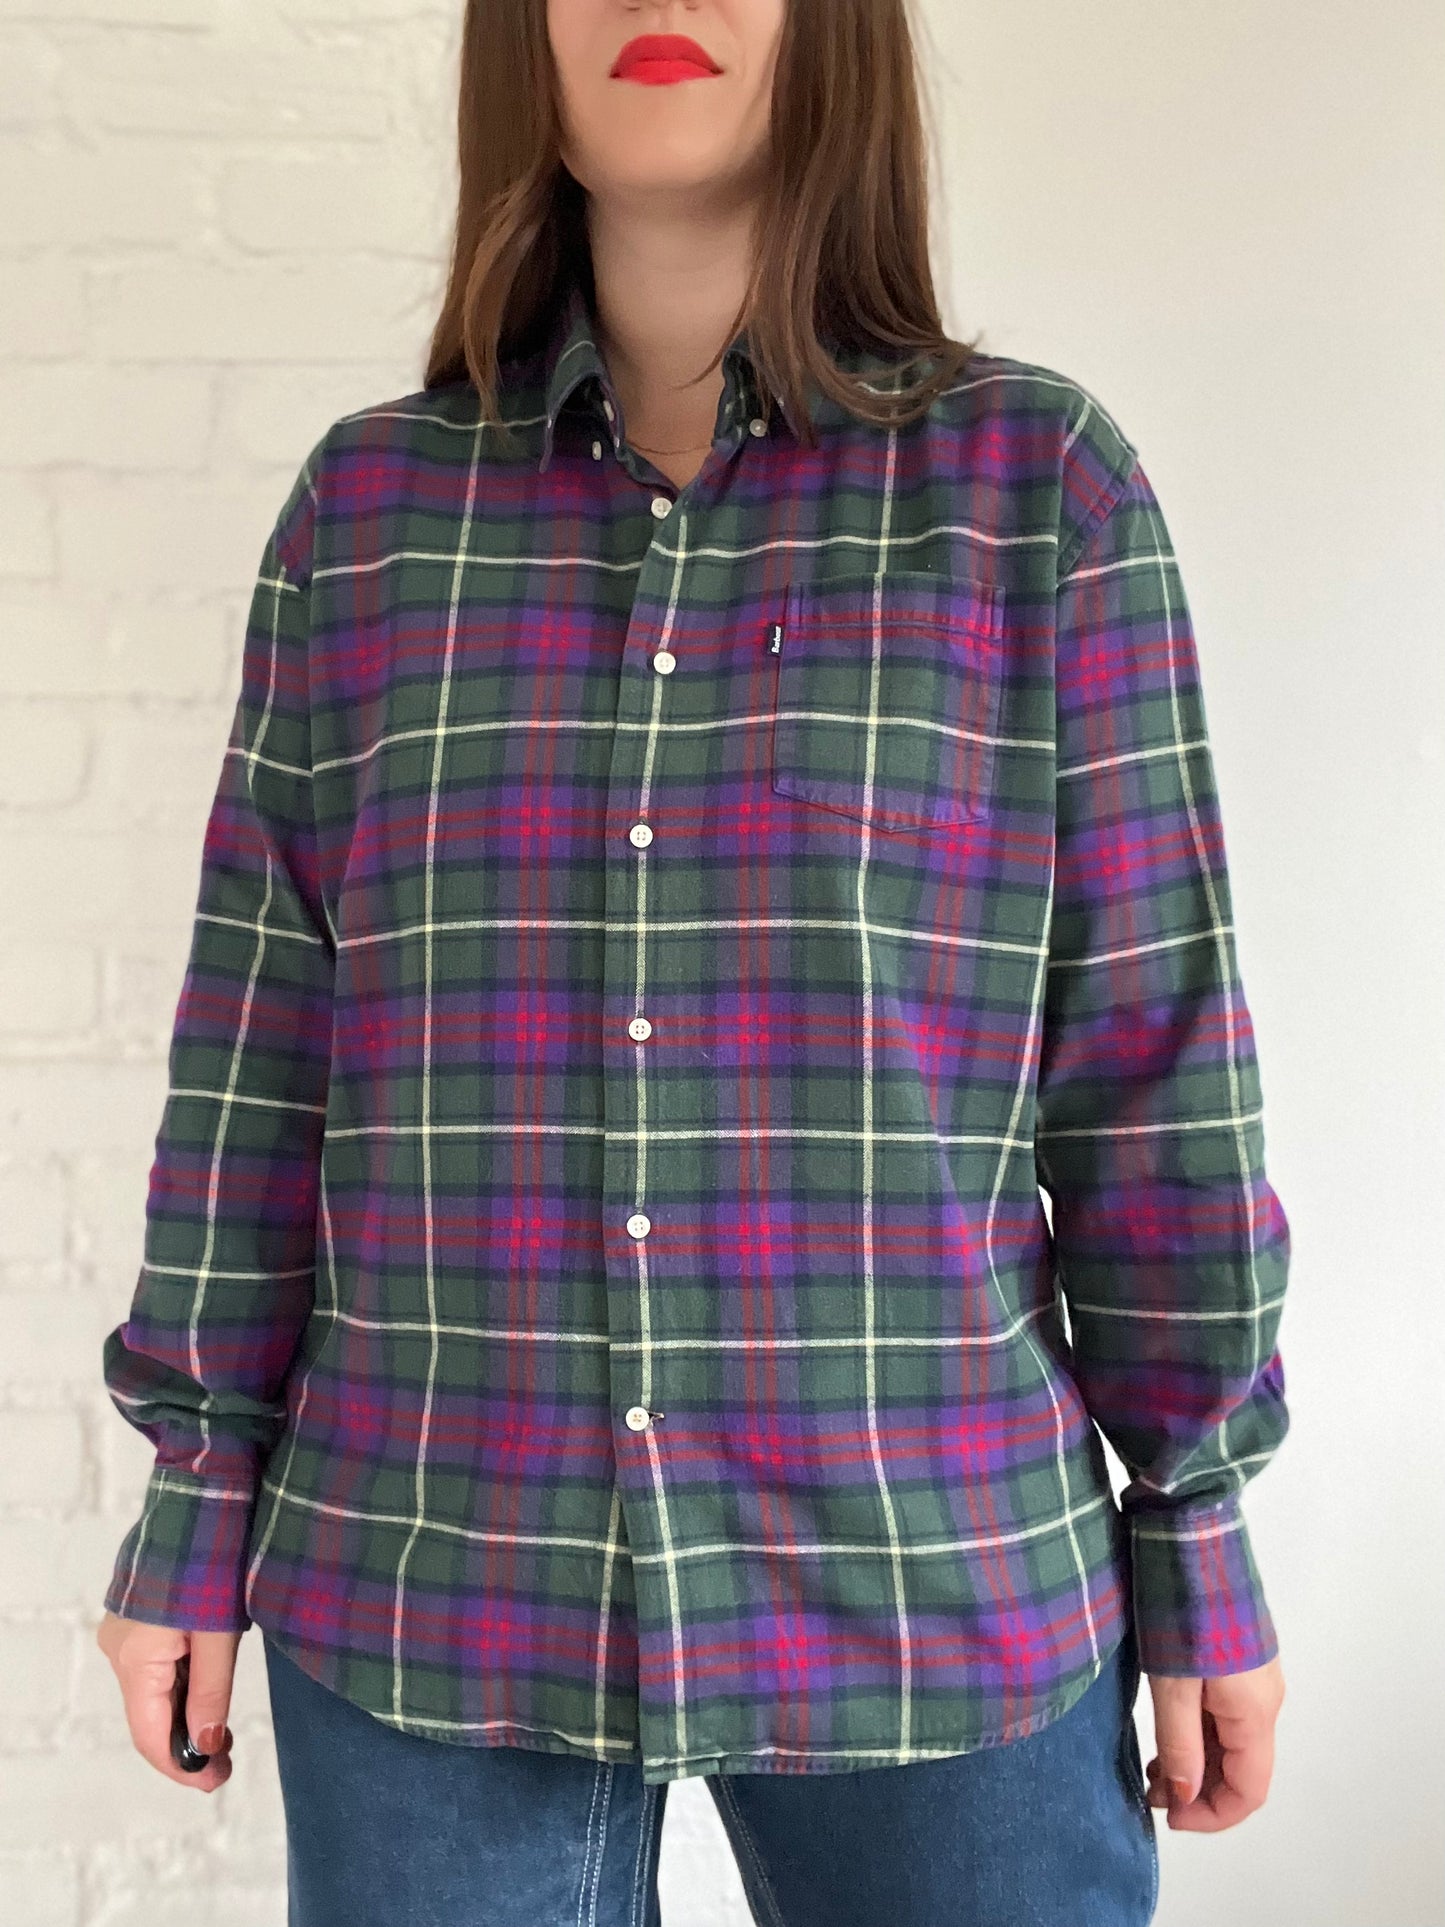 Barbour Tartan Flannel Shirt - L/XL